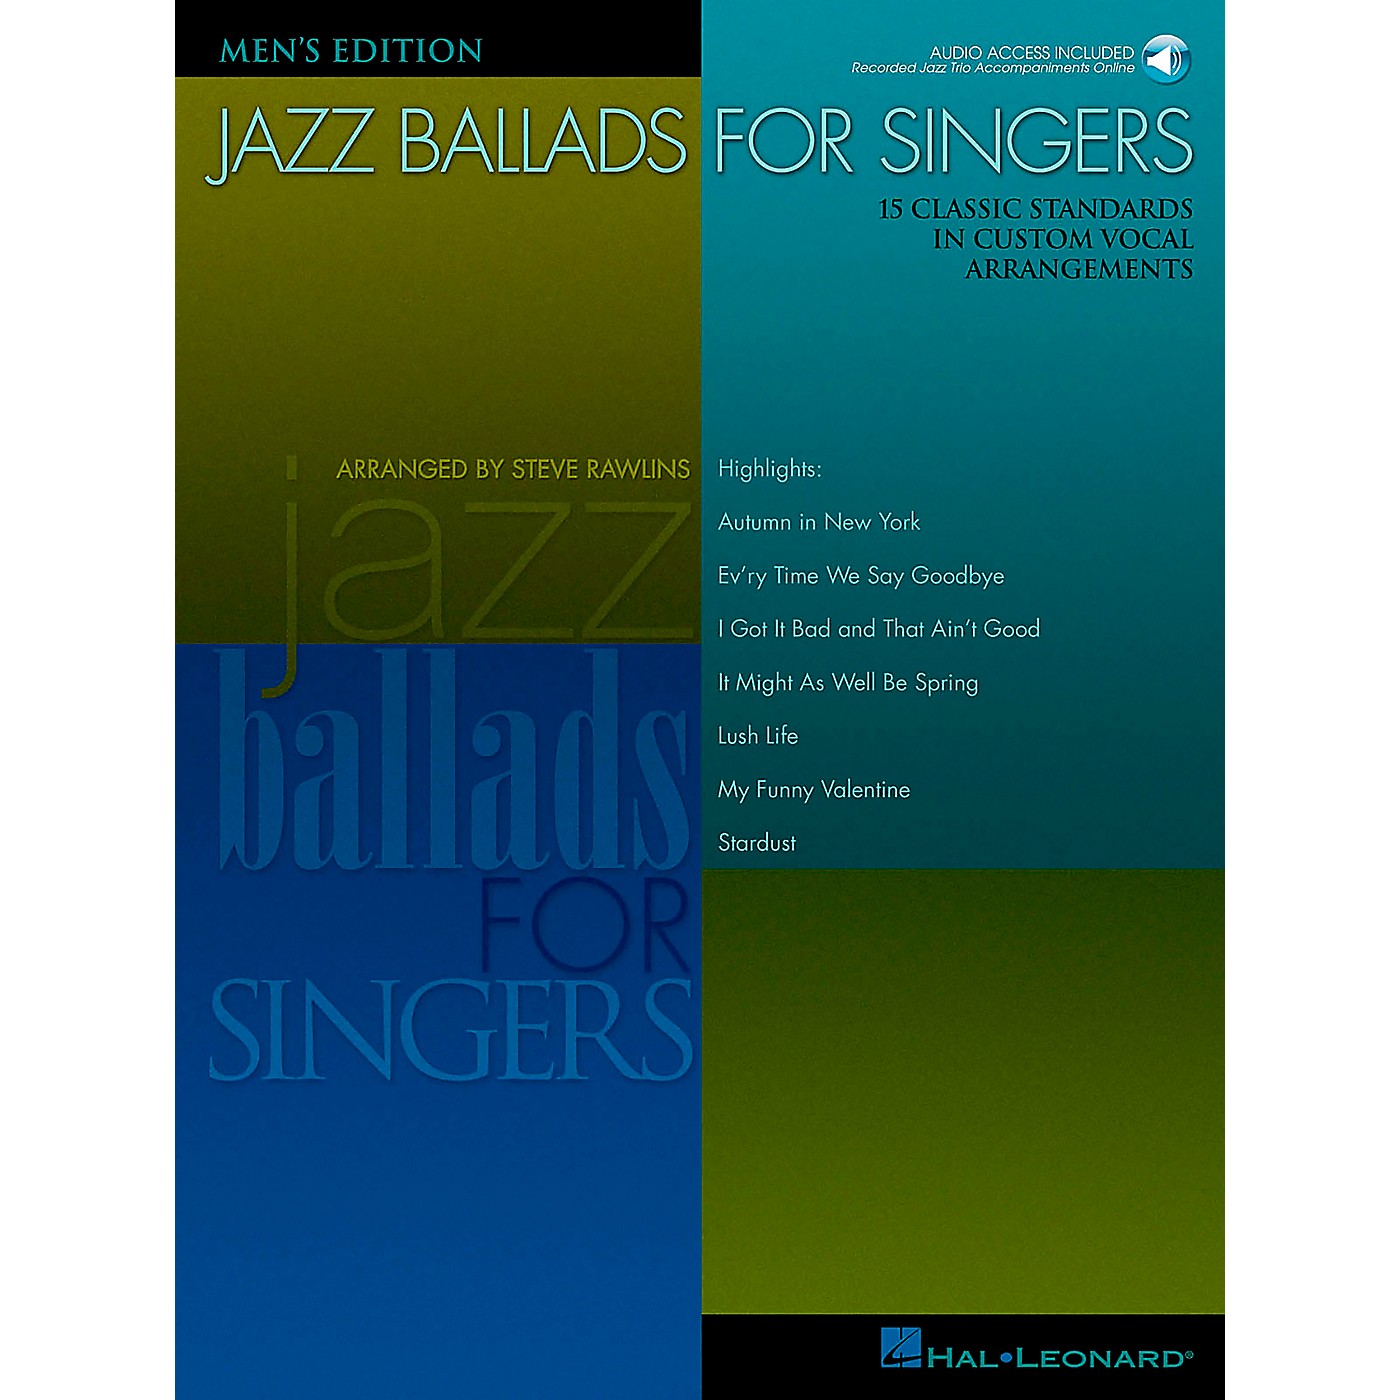 Hal Leonard Jazz Ballads for Singers - Men's Edition Book/Audio Online thumbnail